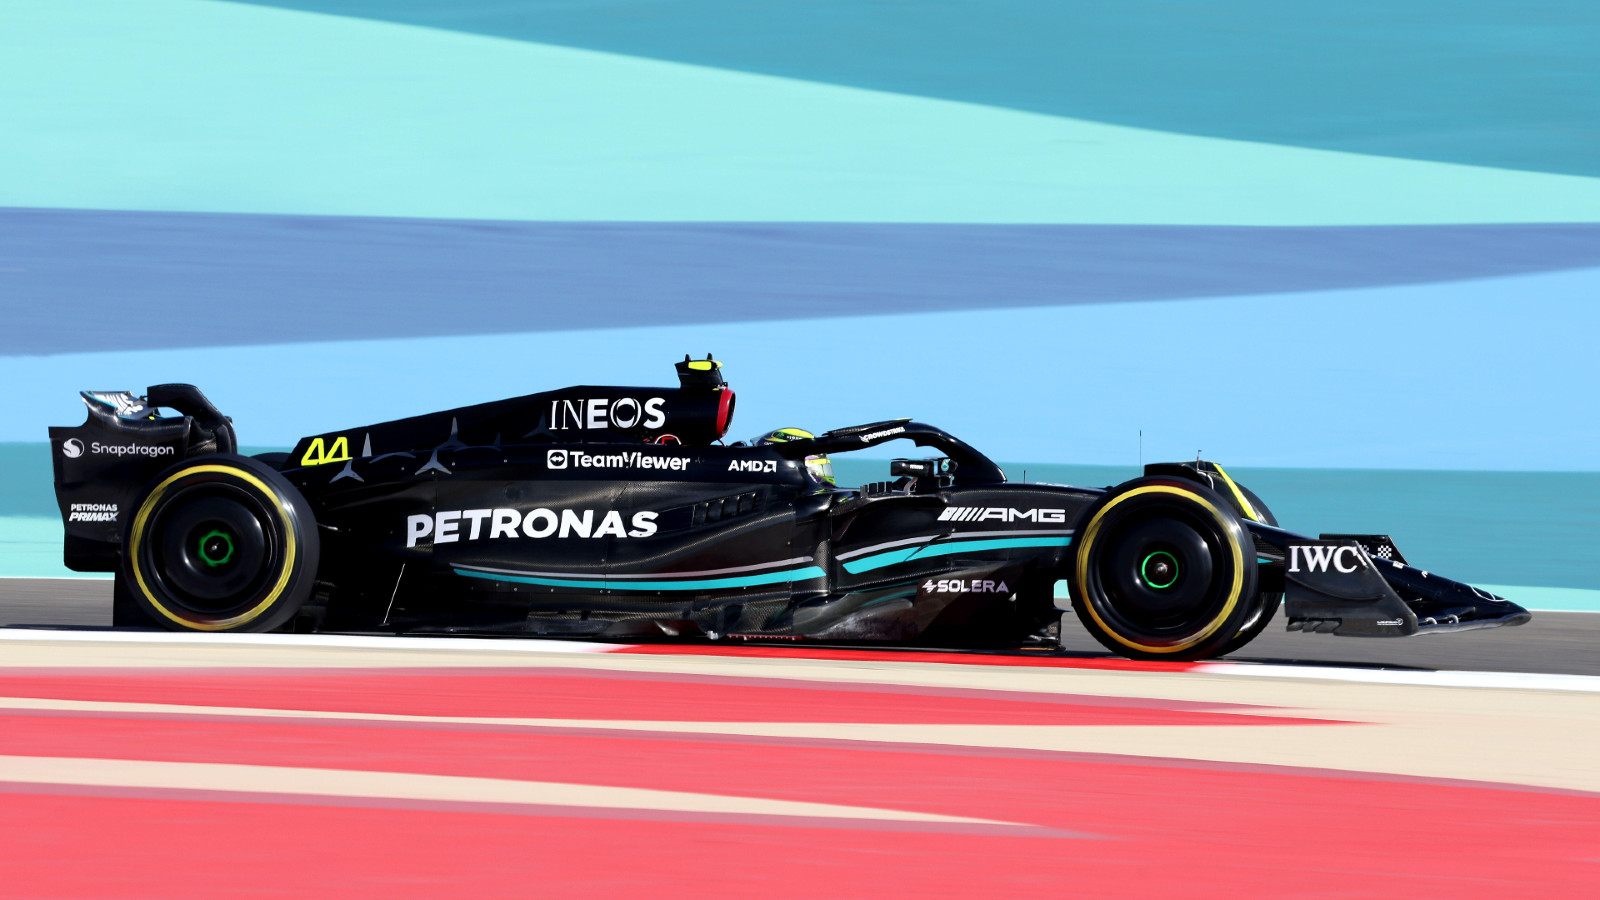 Mercedes' lewis Hamilton on track at the Bahrain Grand Prix. Sakhir, February 2023.